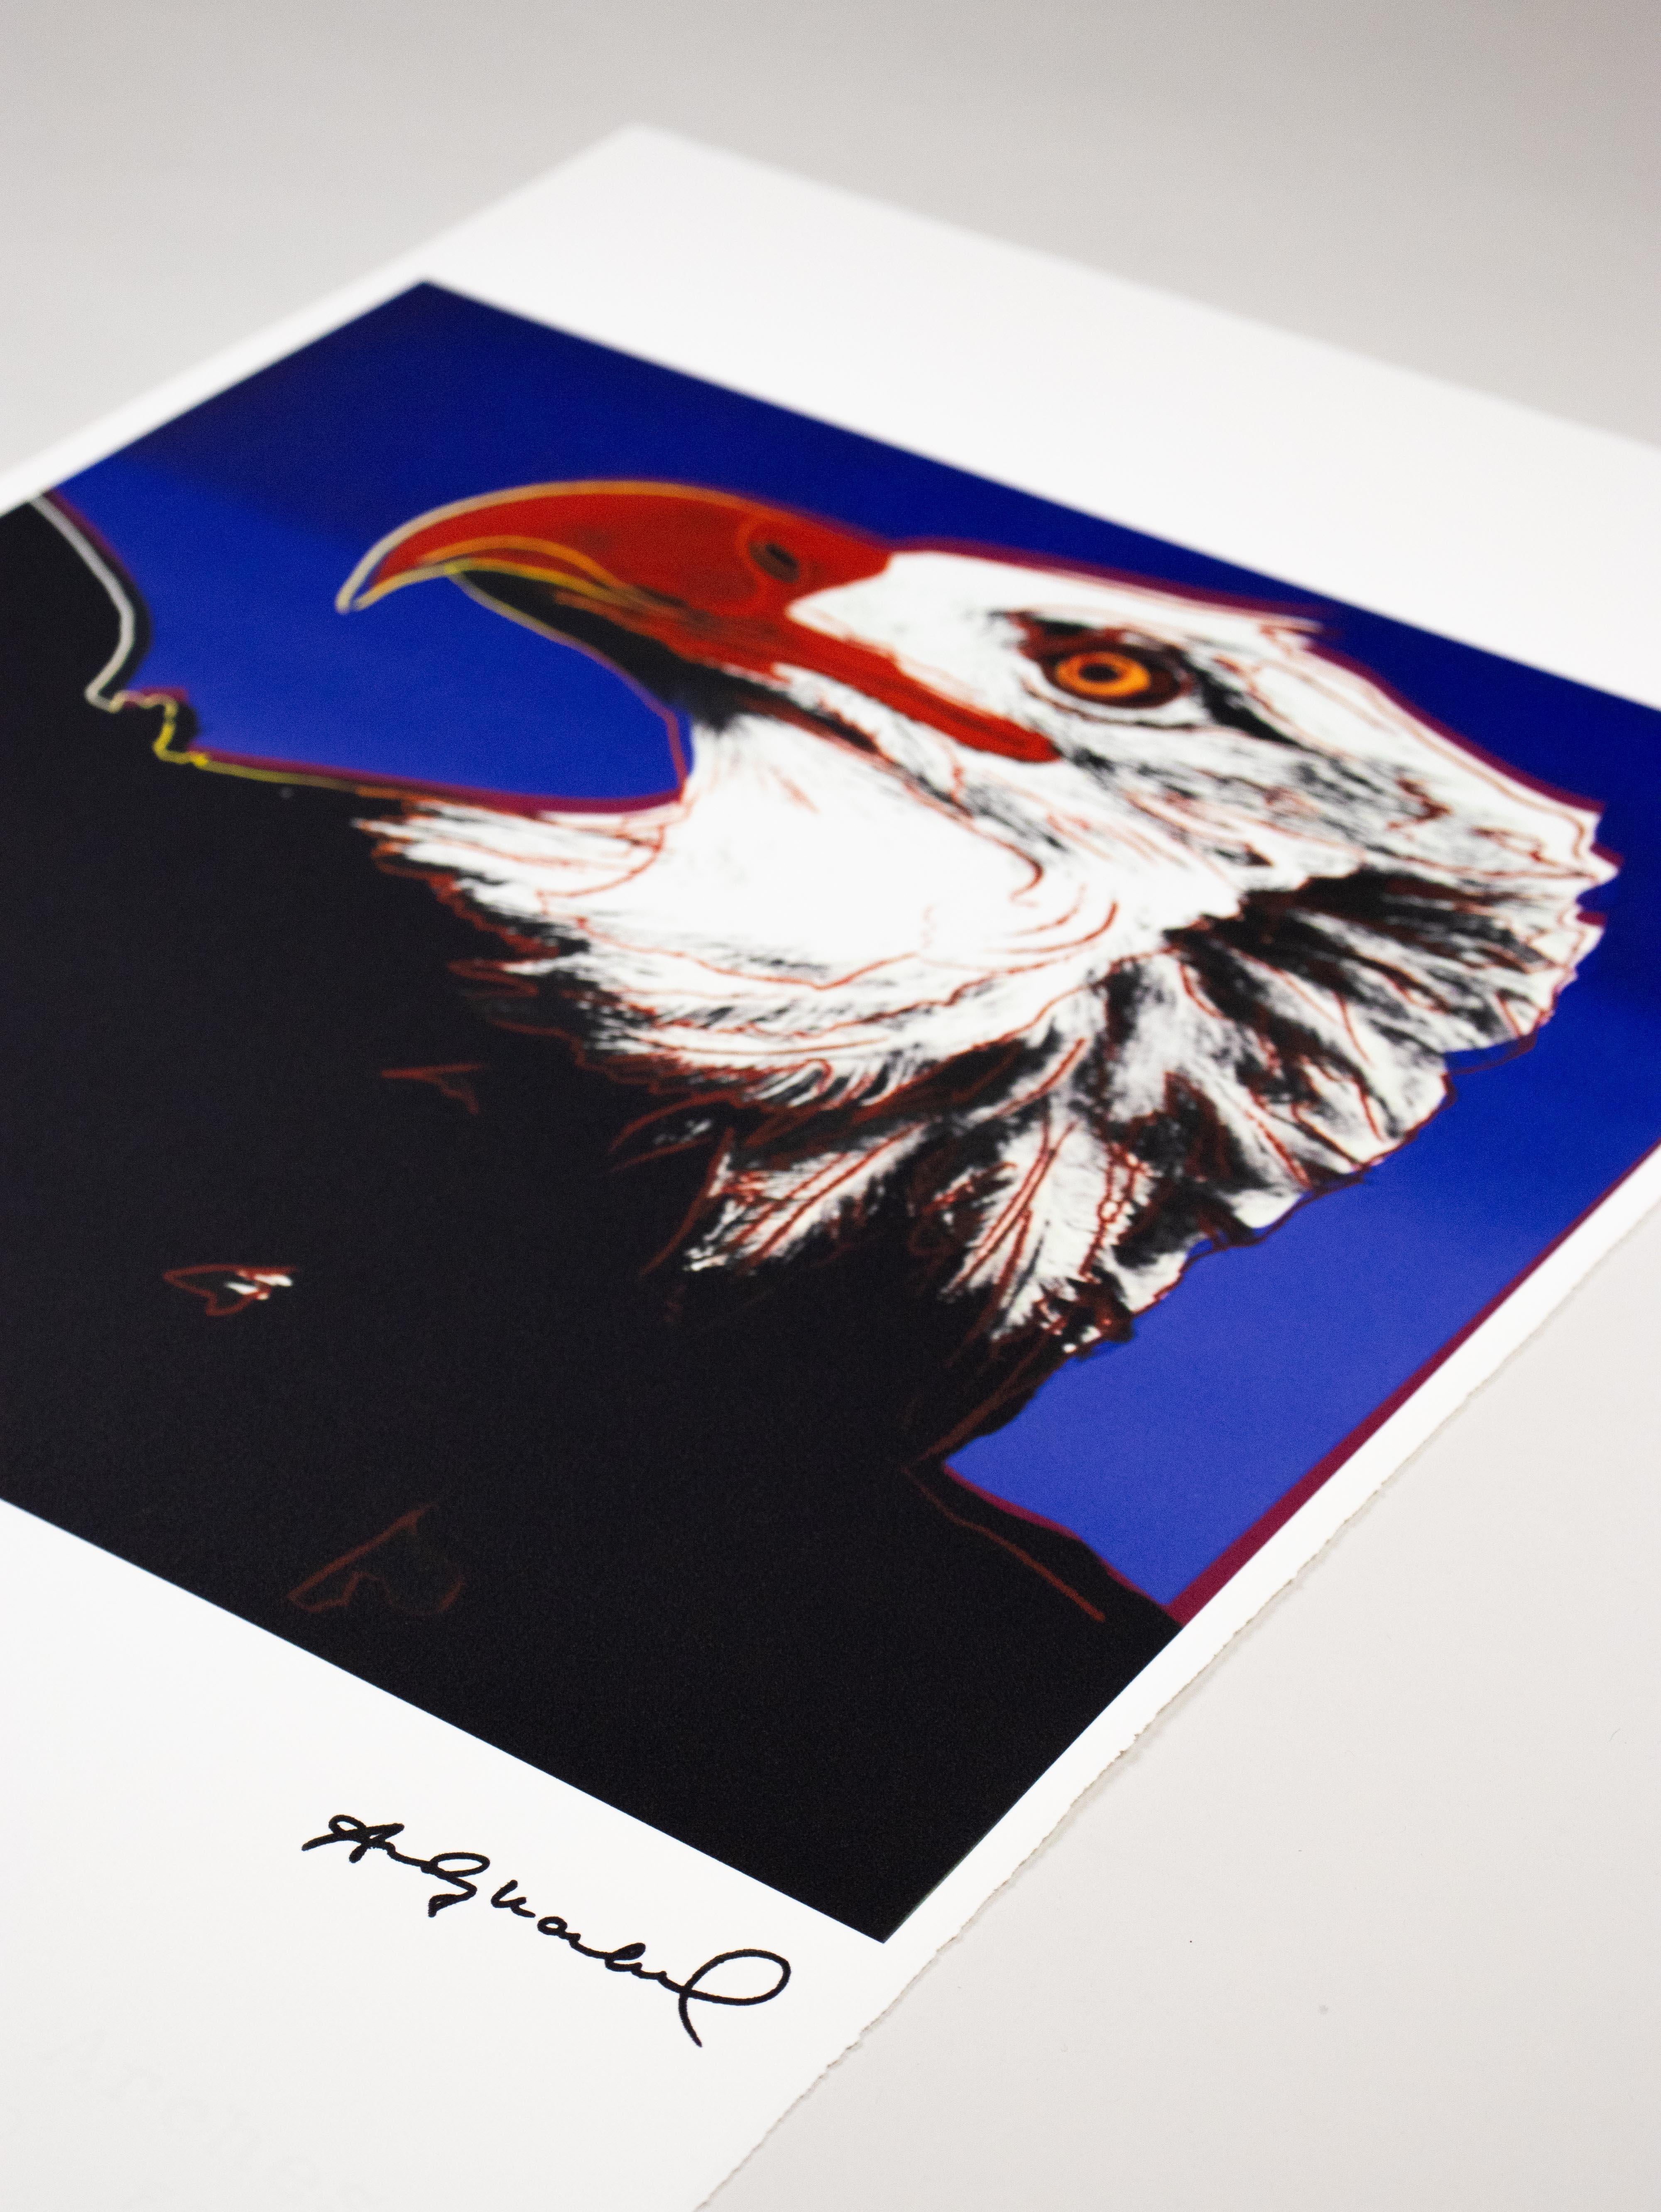 Bald Eagle - 1983 - Original Lithograph - Limited Edition Print - 40/100 pcs. 3